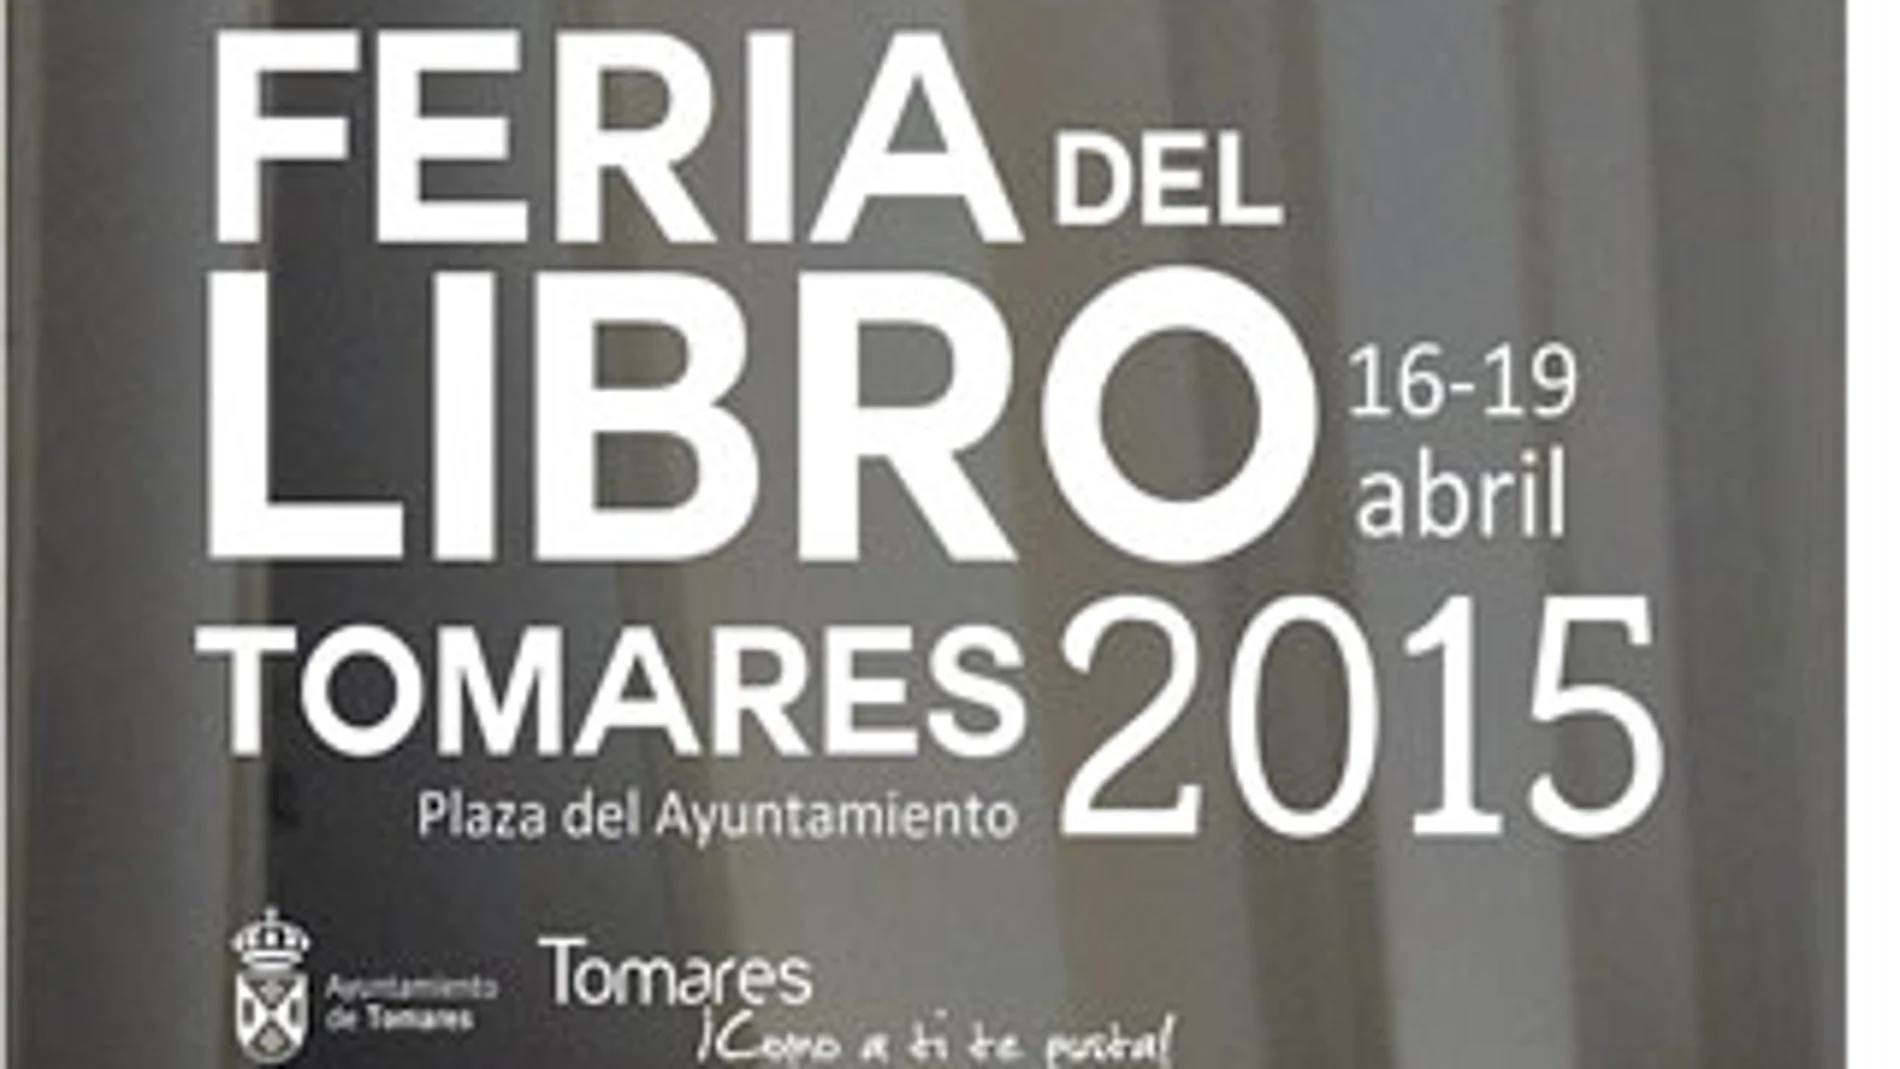 Feria del Libro Tomares 2015